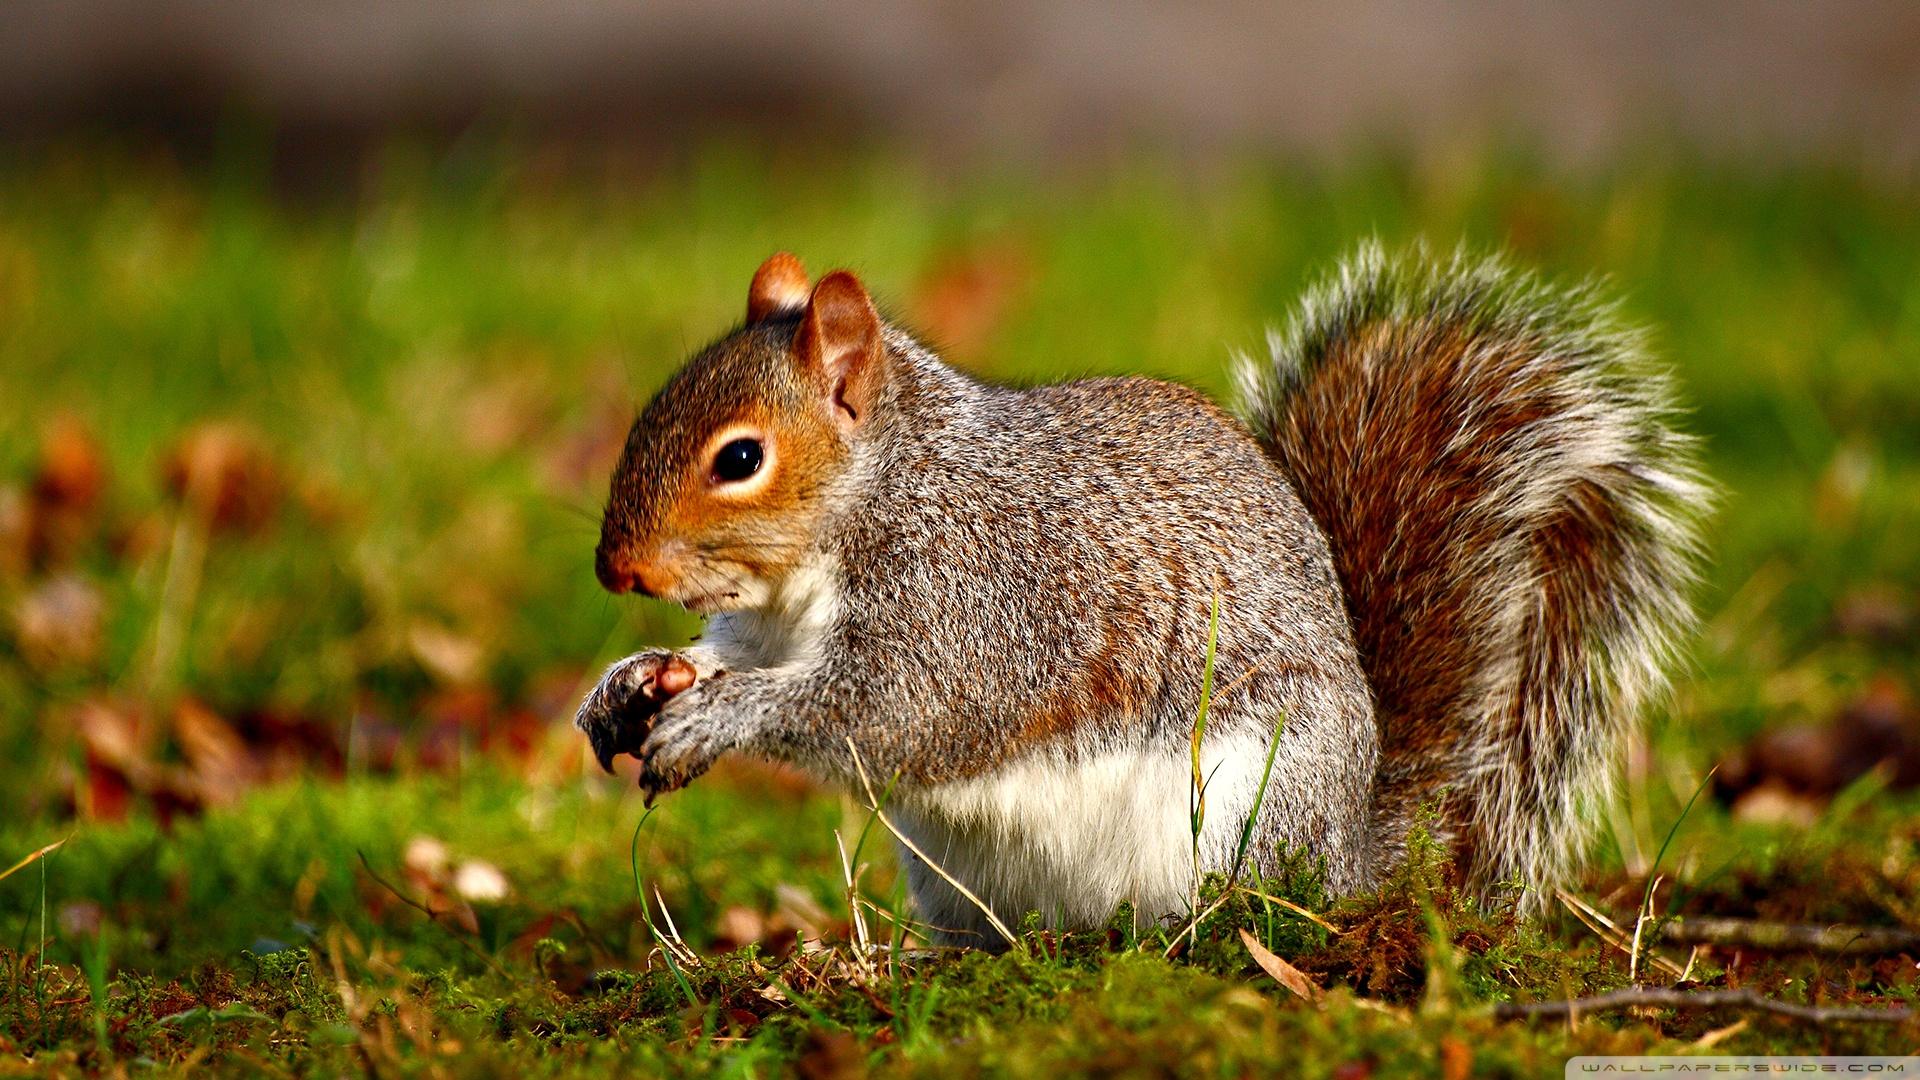 6,000+ Free Squirrel & Nature Images - Pixabay